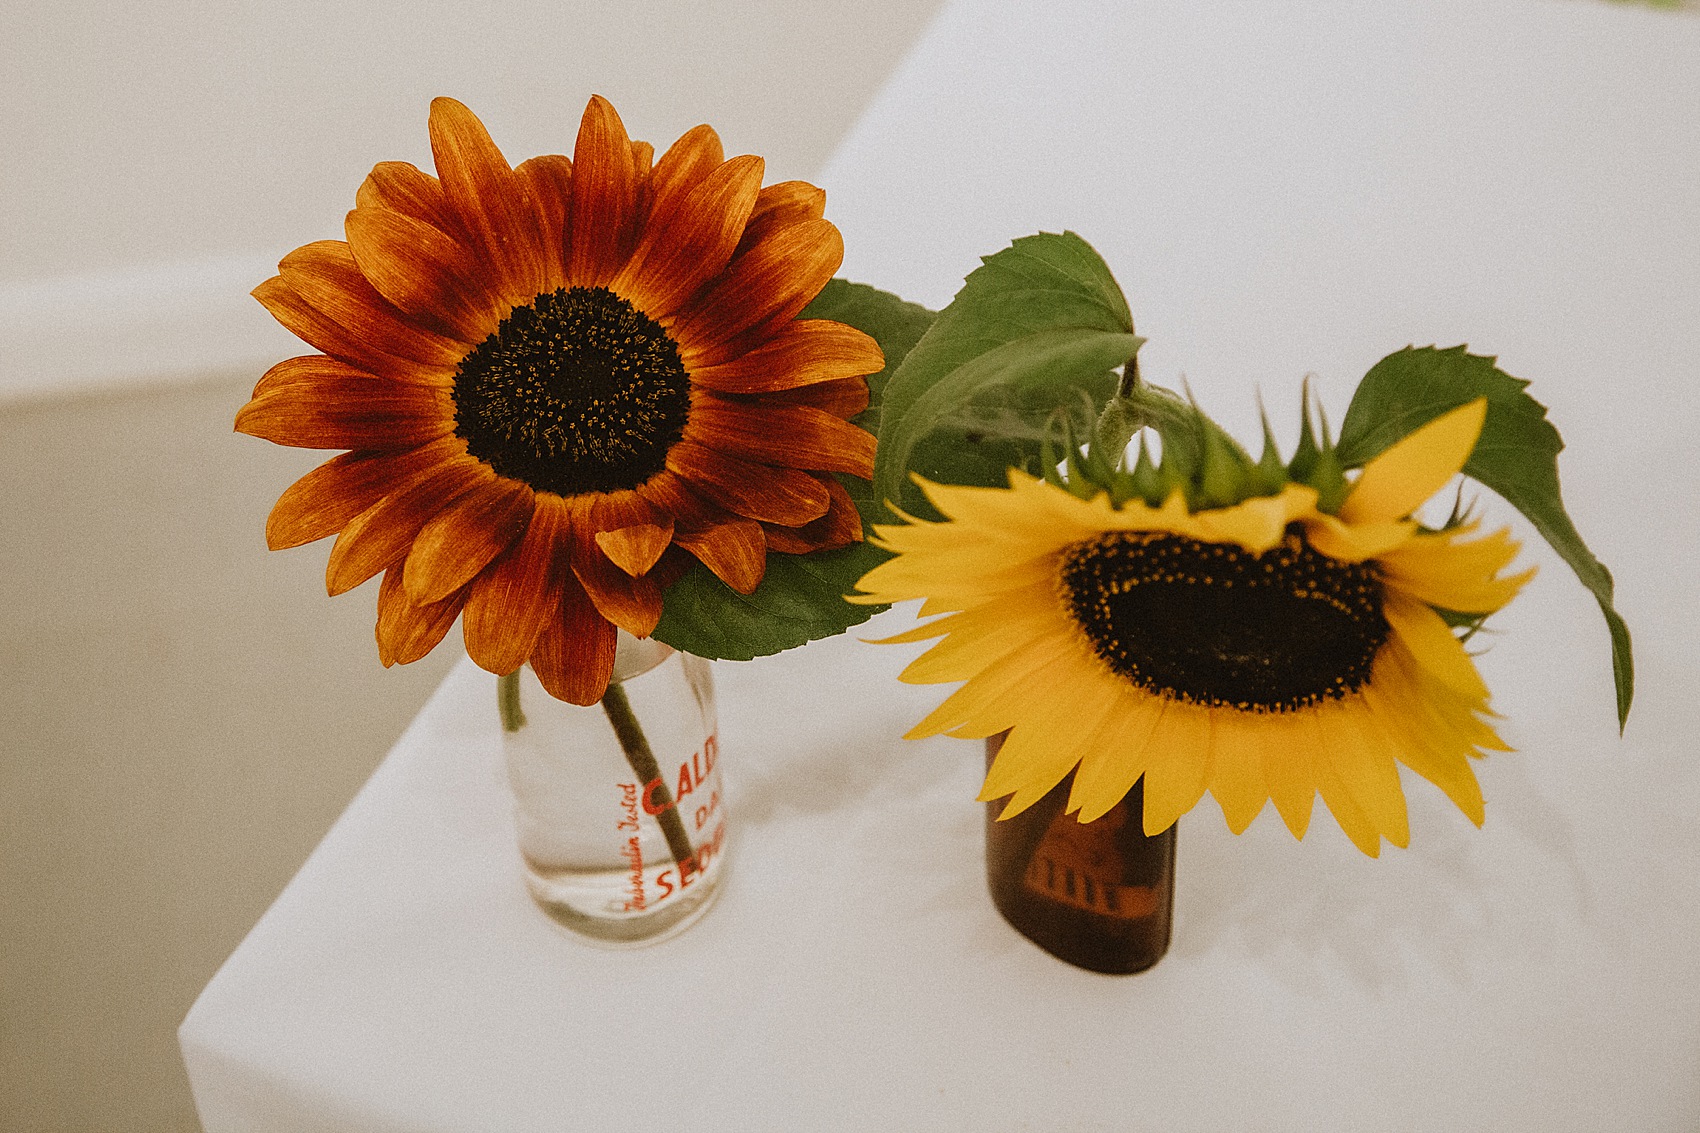 1960s inspired wedding sunflowers 4